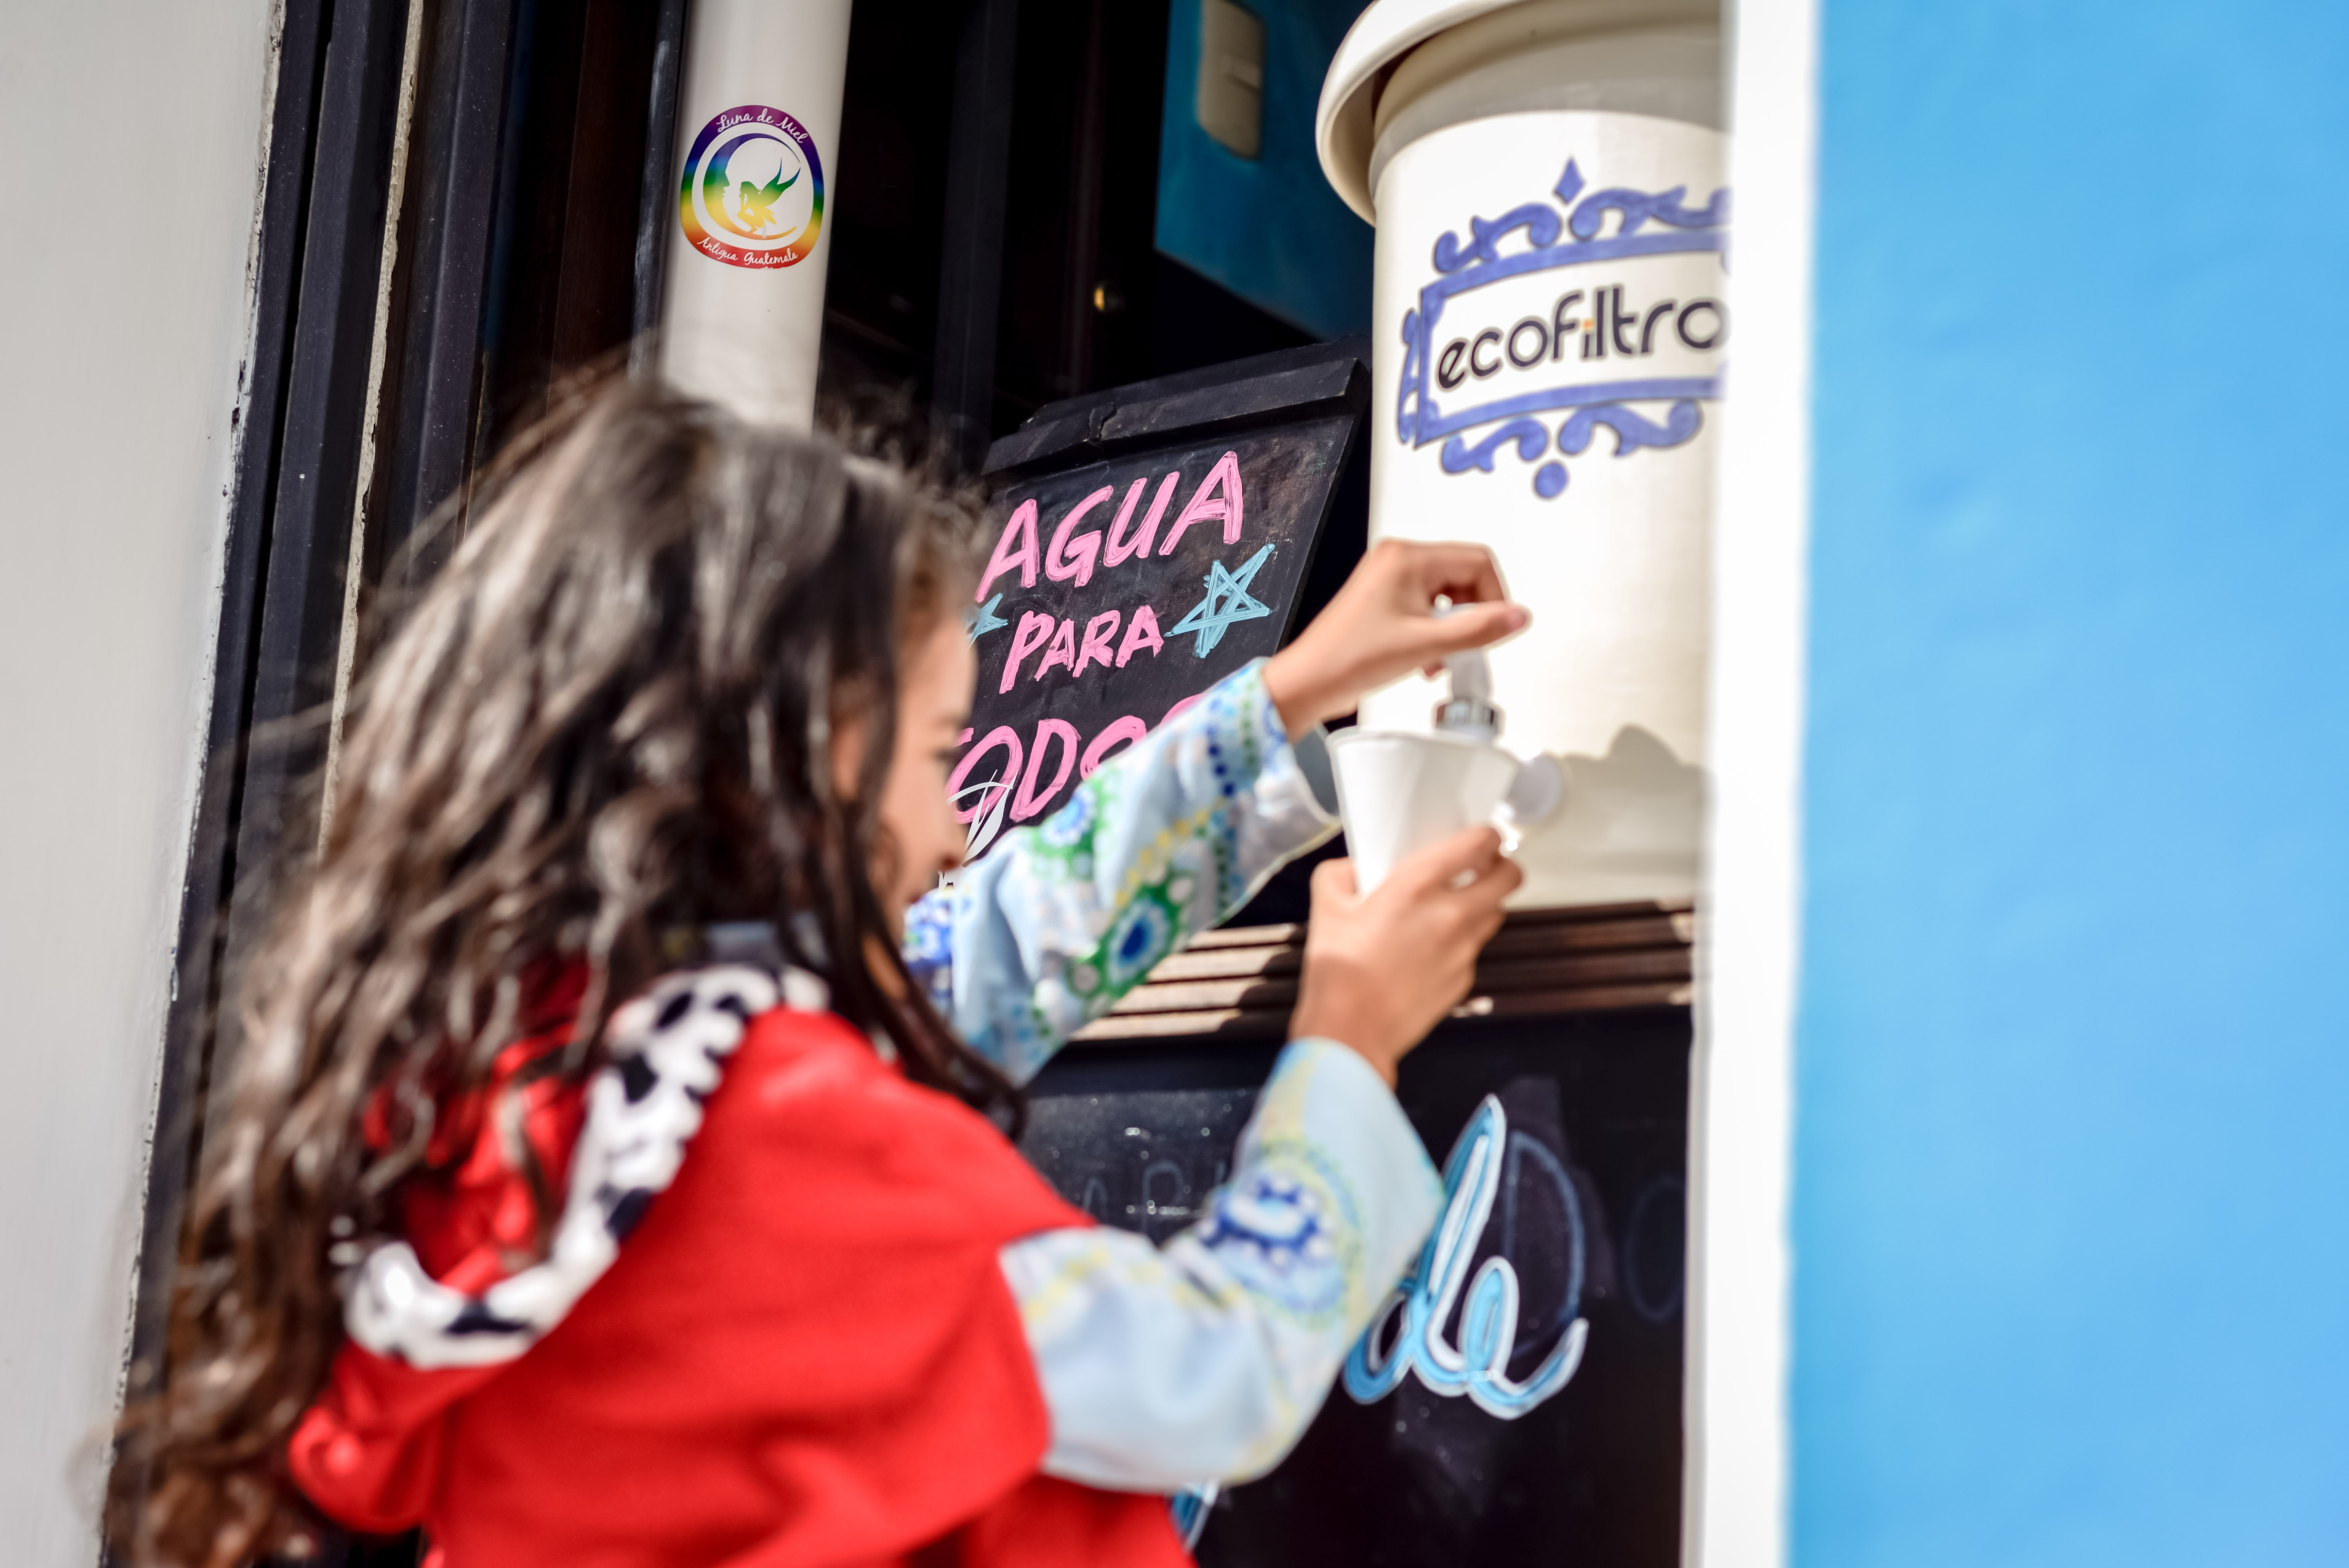 Restaurante con apoyo de Ecofiltro lanza iniciativa “Agua para Todos”